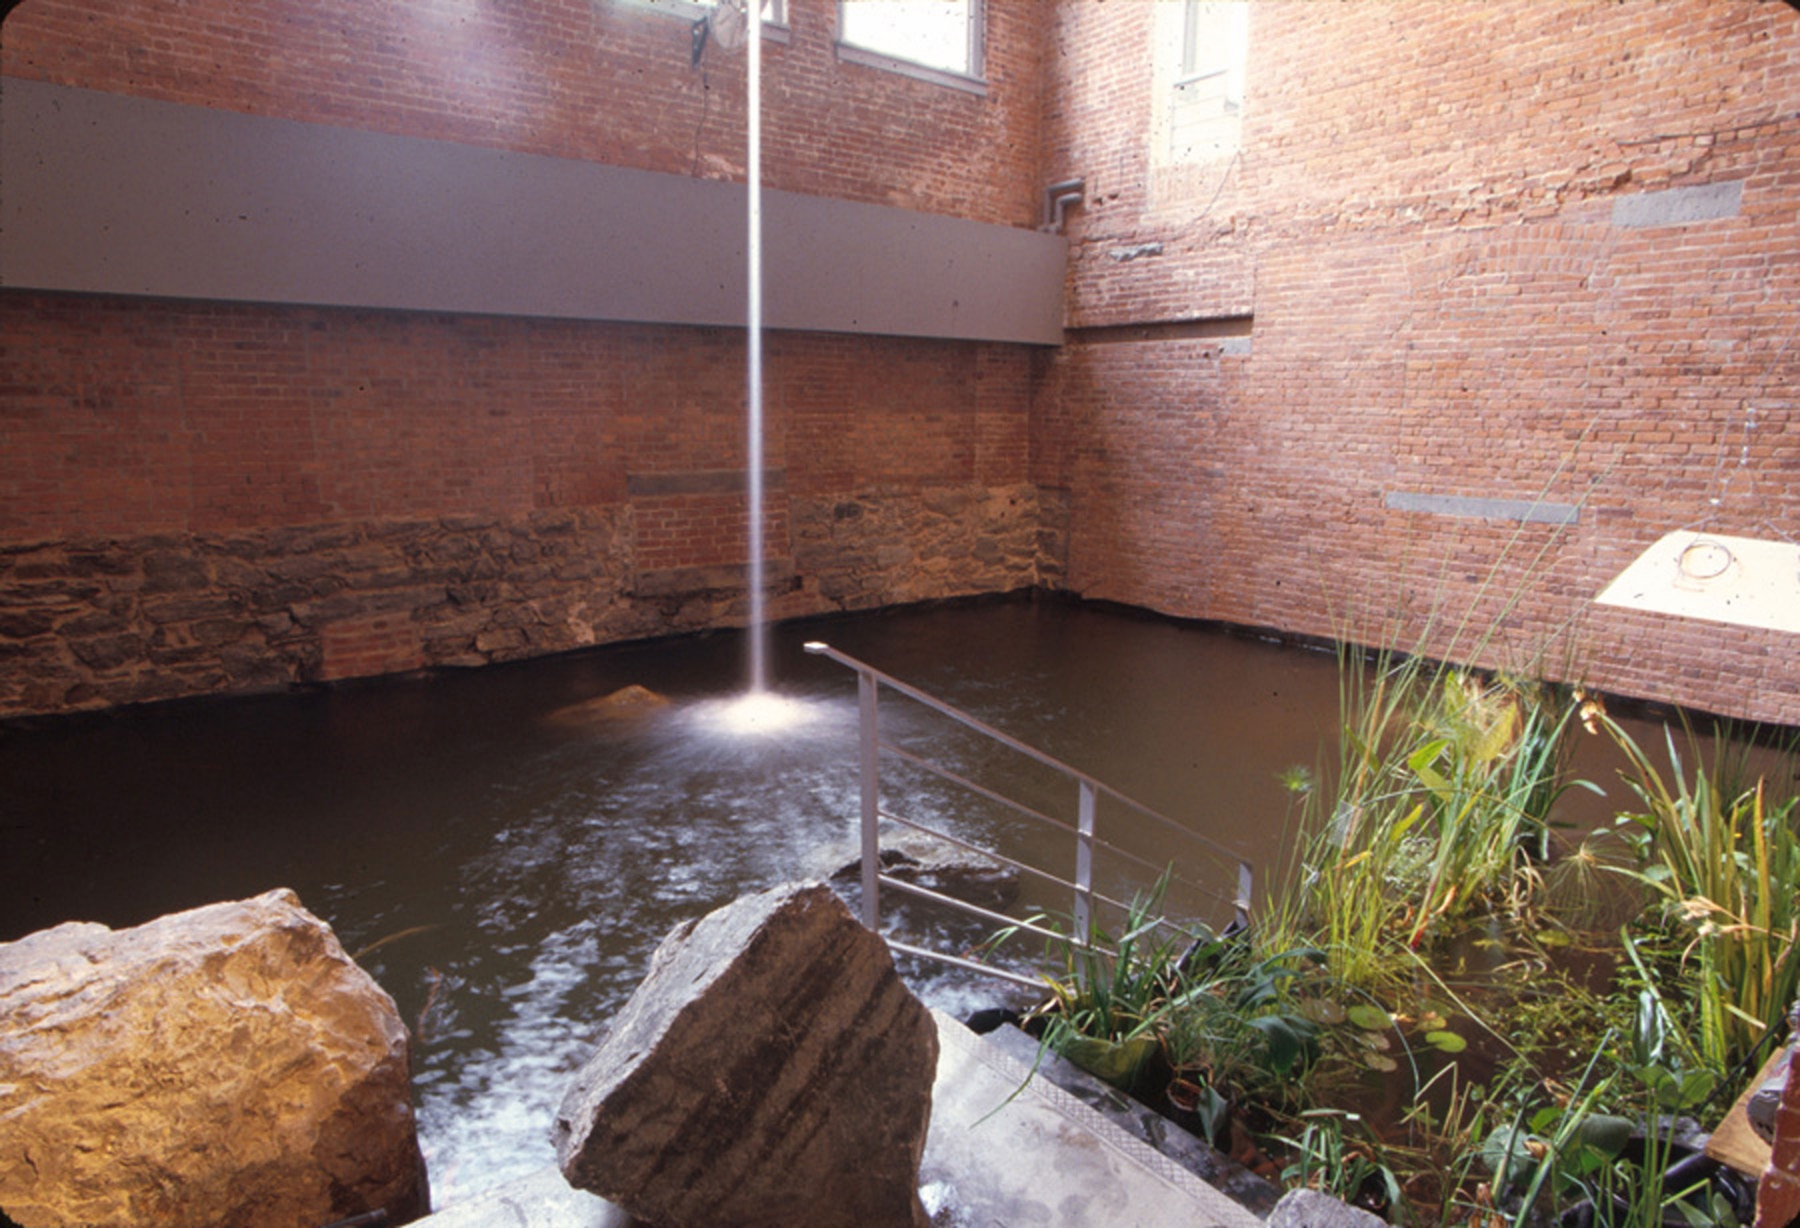    Pool, P.S. 1 Contemporary Art Center, Long Island City, New York, 1998